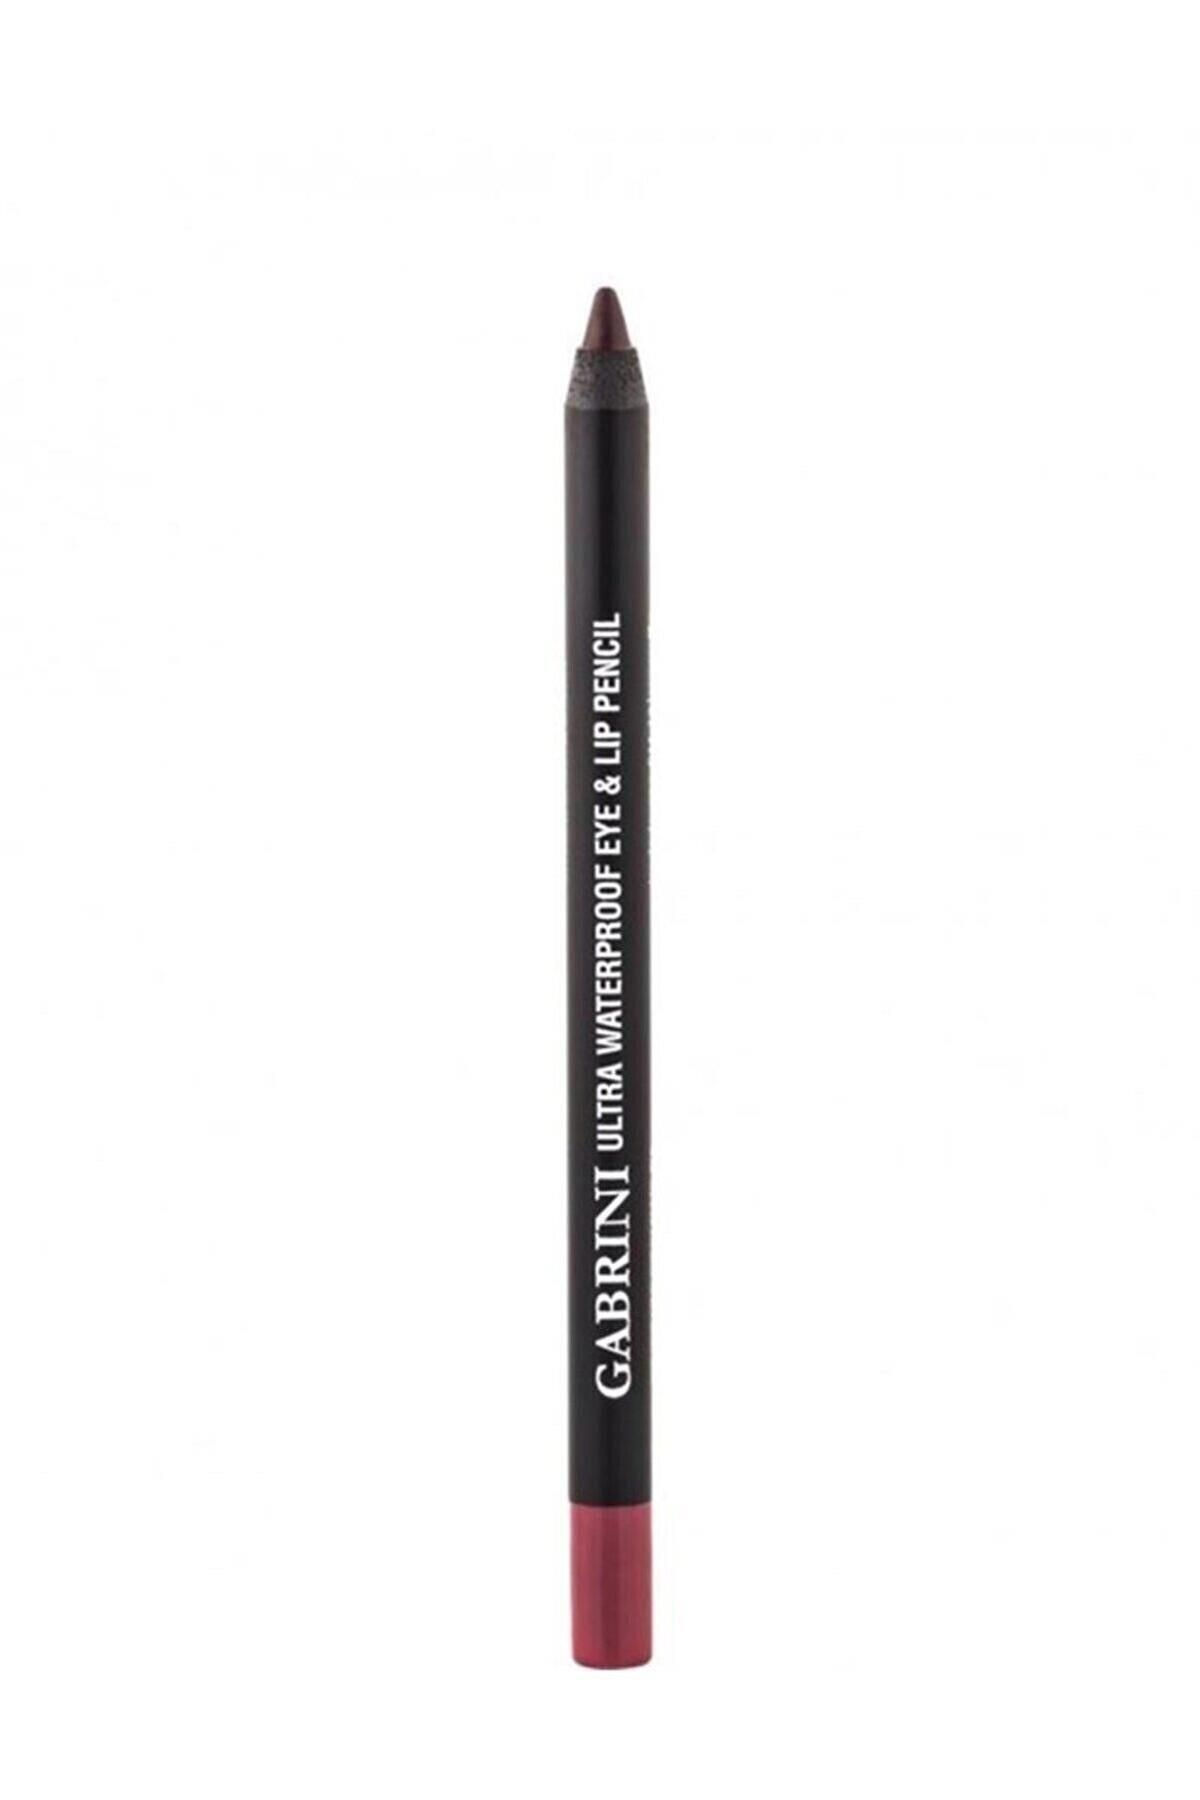 Gabrini Ultra Waterproof Eye & Lip Pencil 16